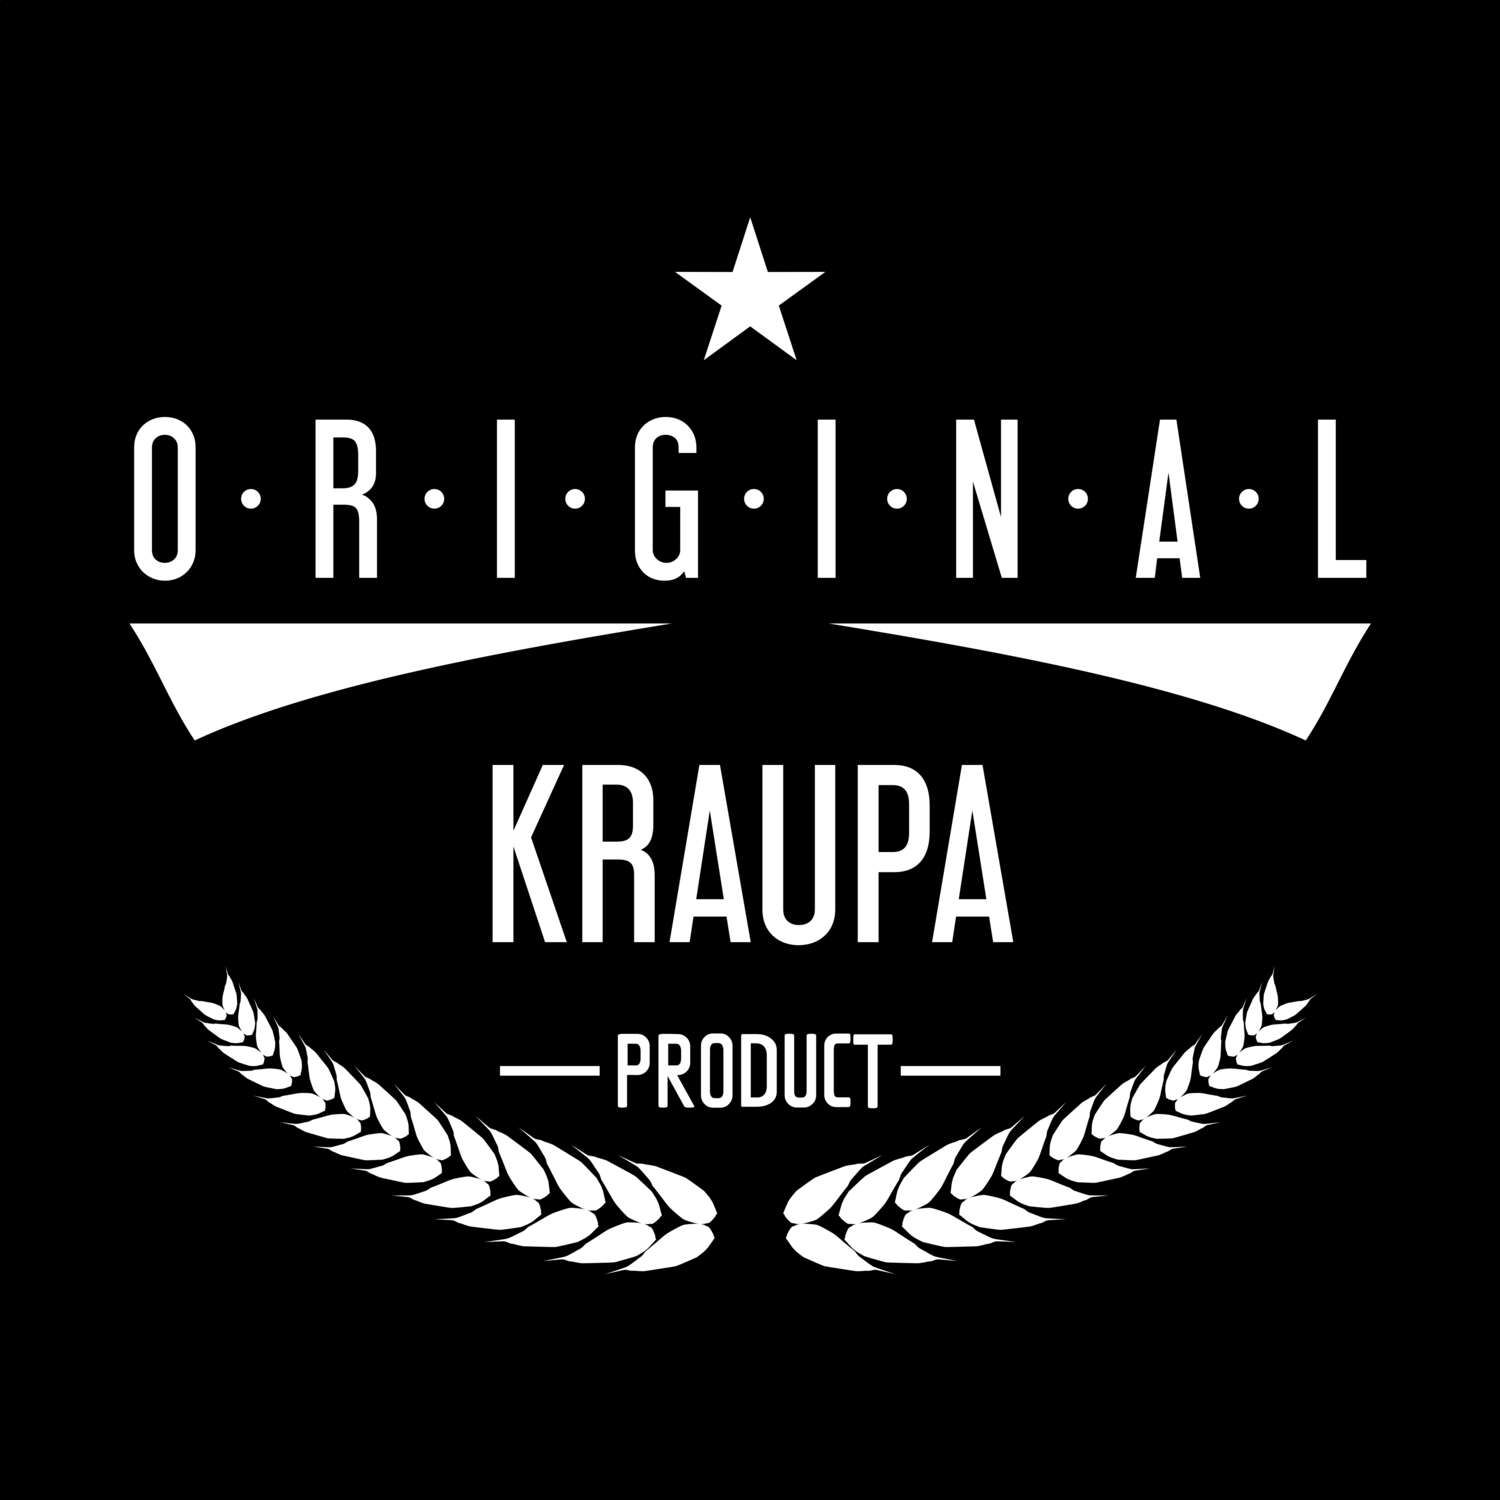 Kraupa T-Shirt »Original Product«